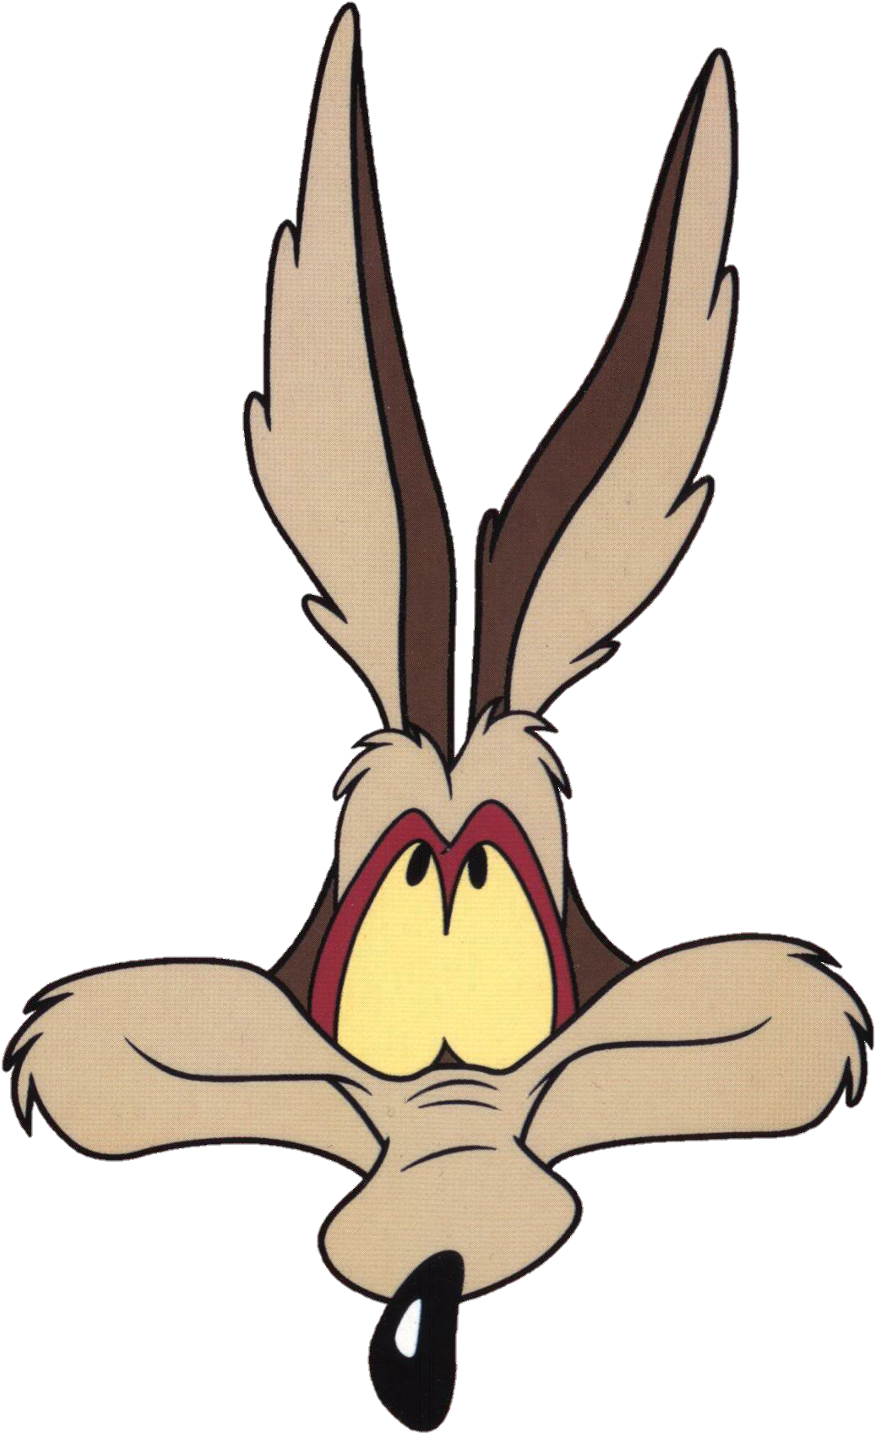 Cartoon Character Of A Cartoon Rabbit